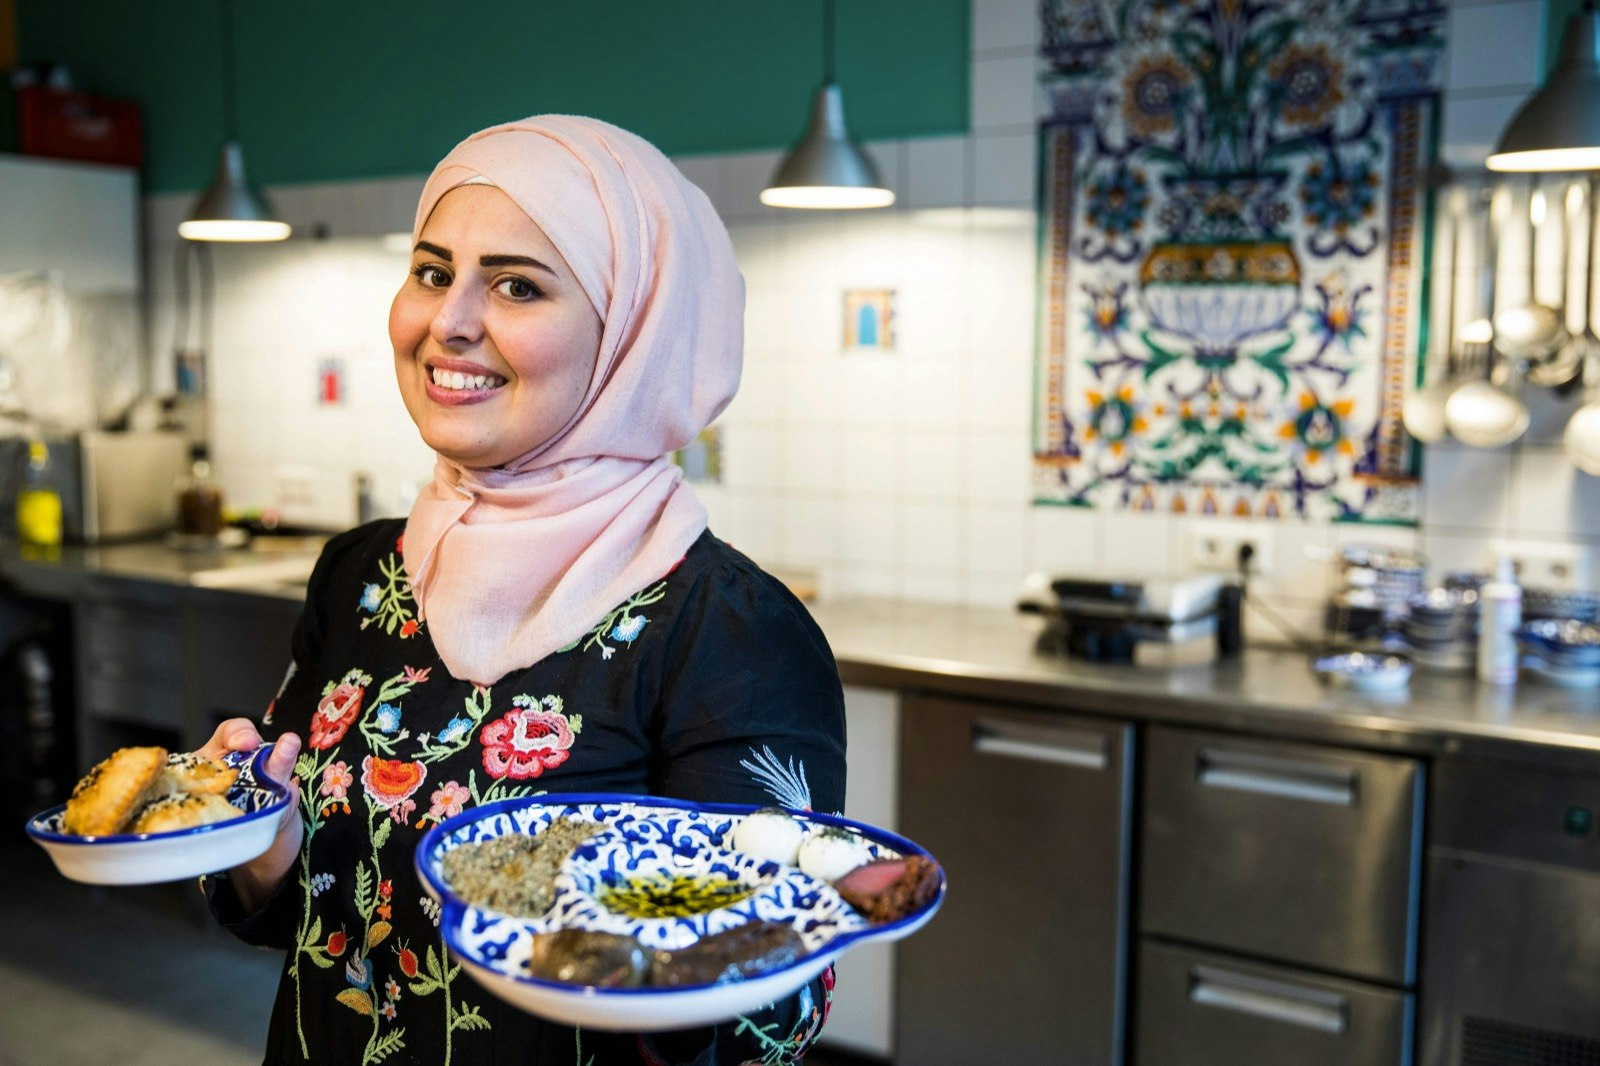 Malakeh Jazmati presents a signature dish in her kitchen